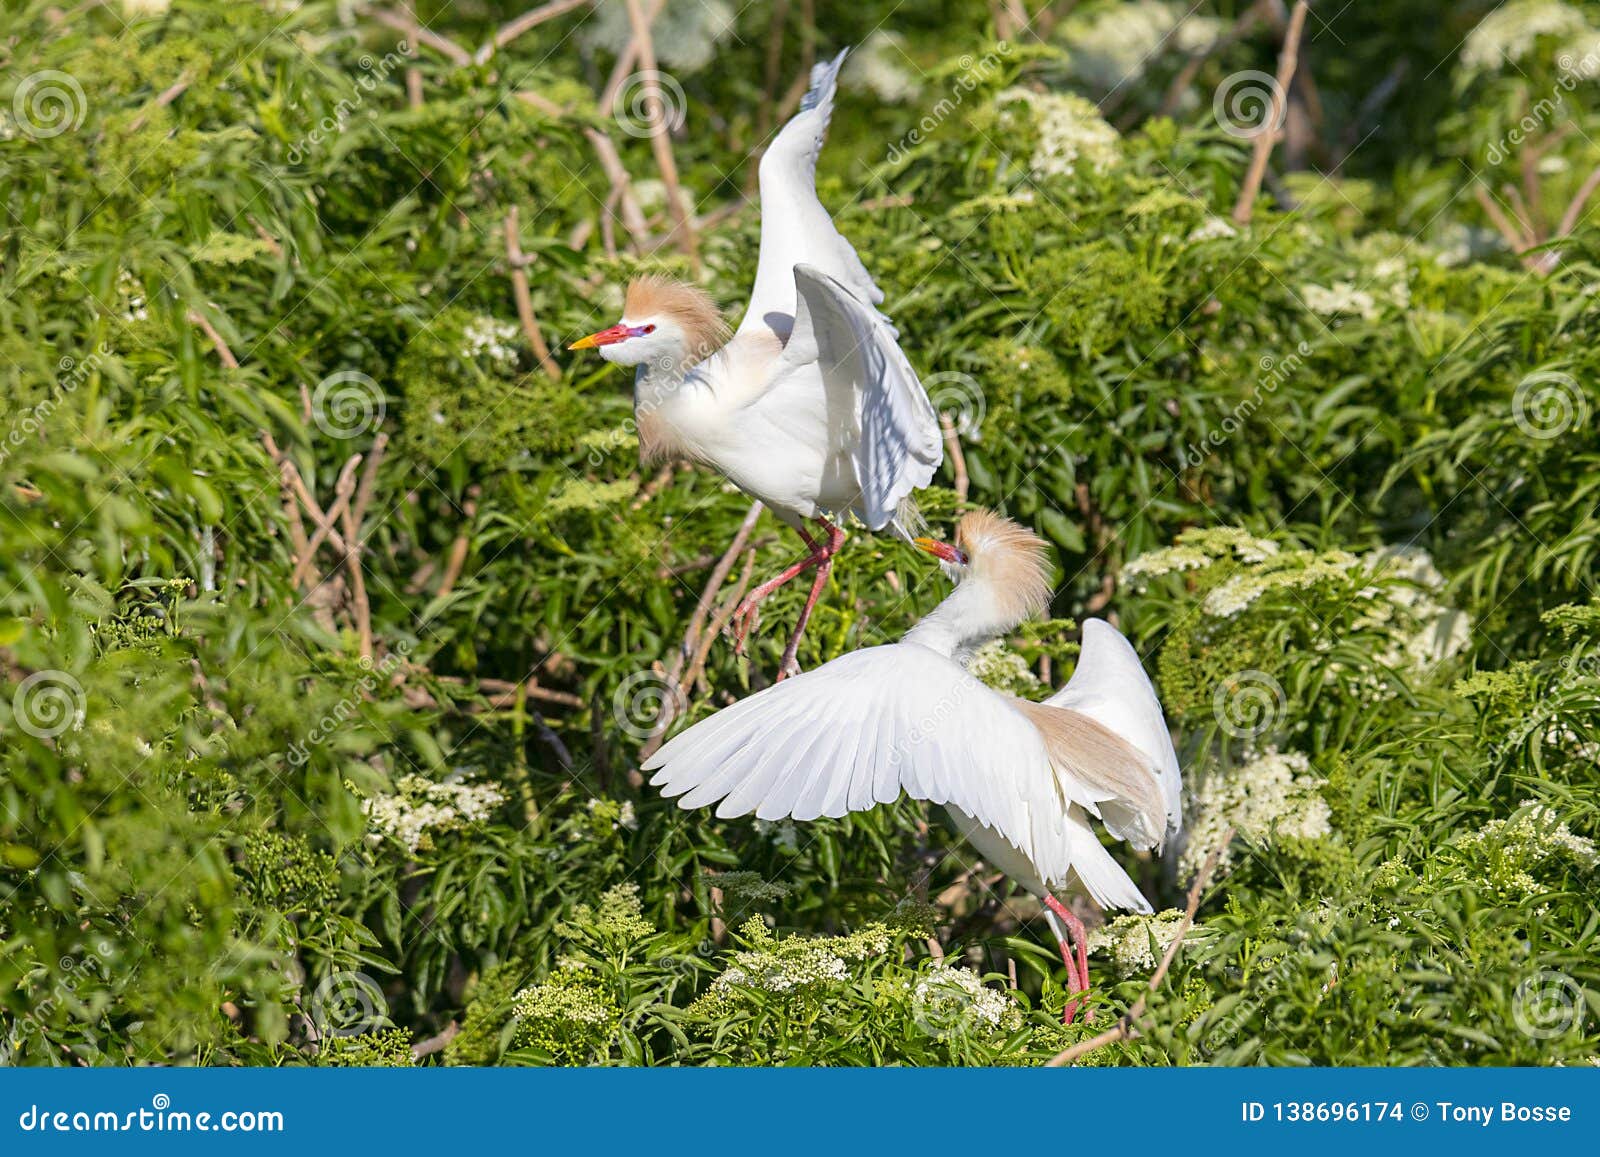 cattle egrets territorial fight, squabble